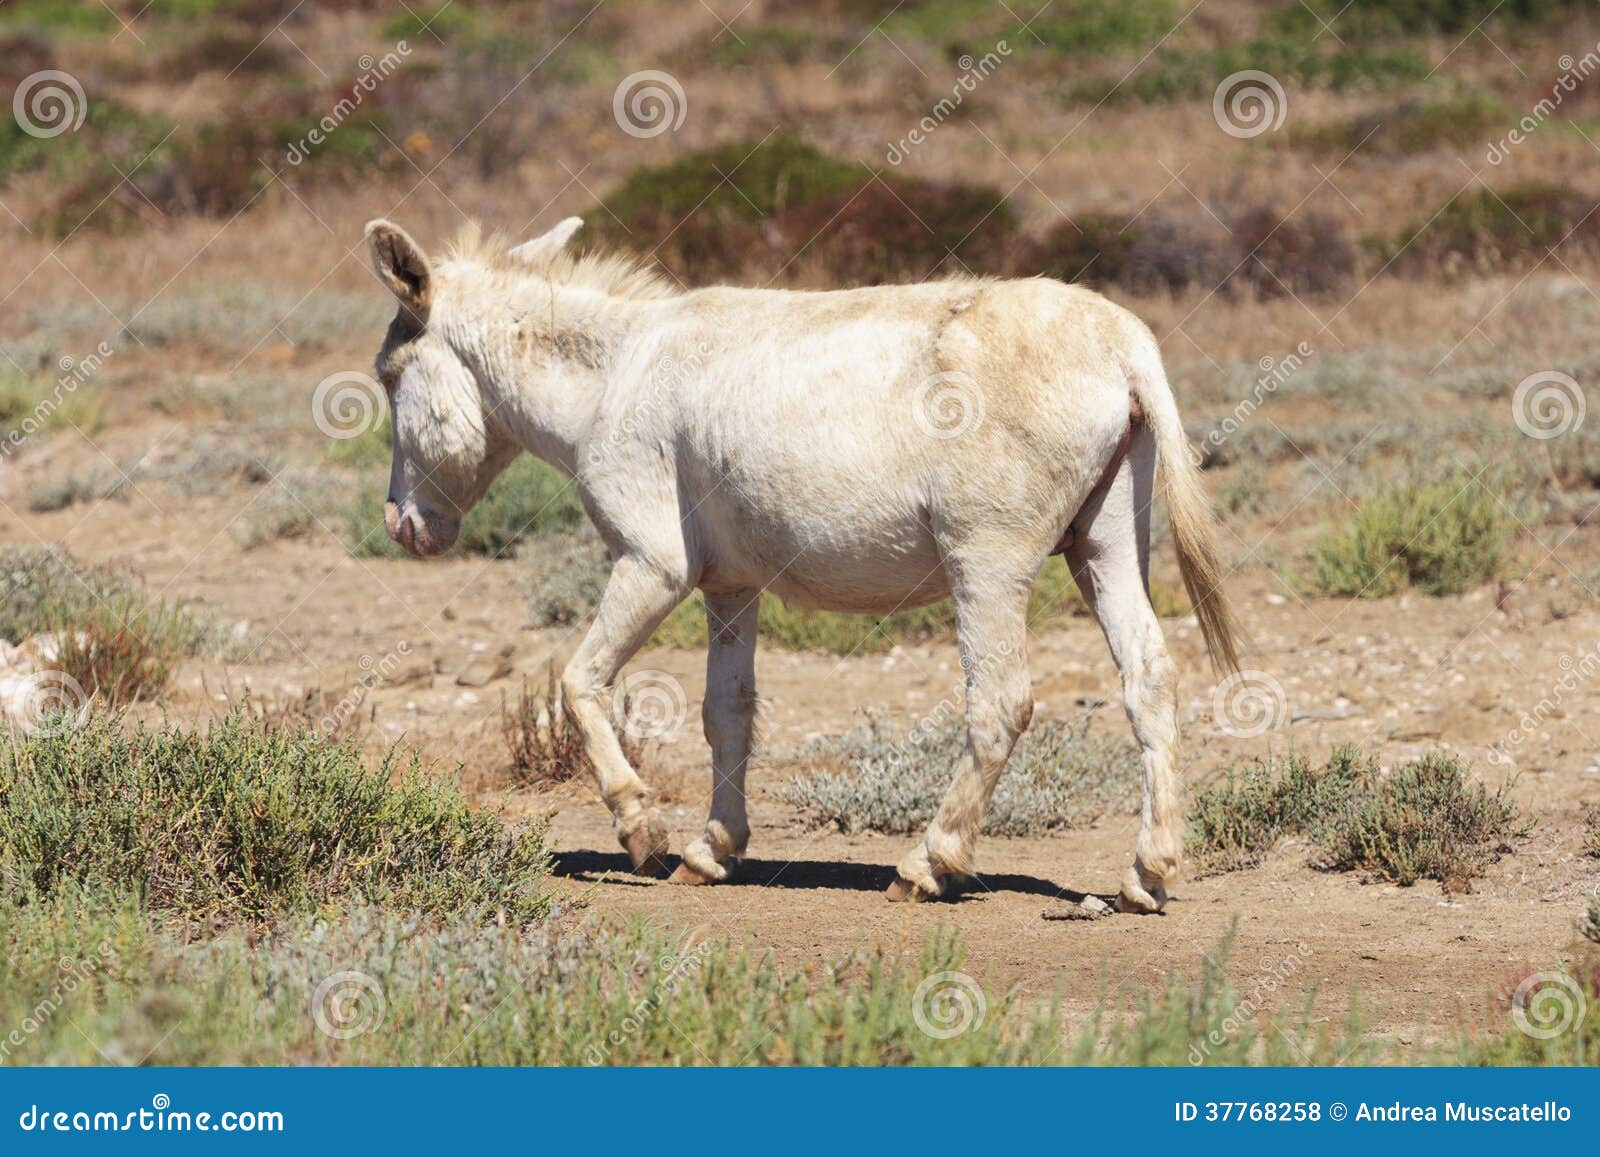 white donkey, resident only island asinara, sardinia italy